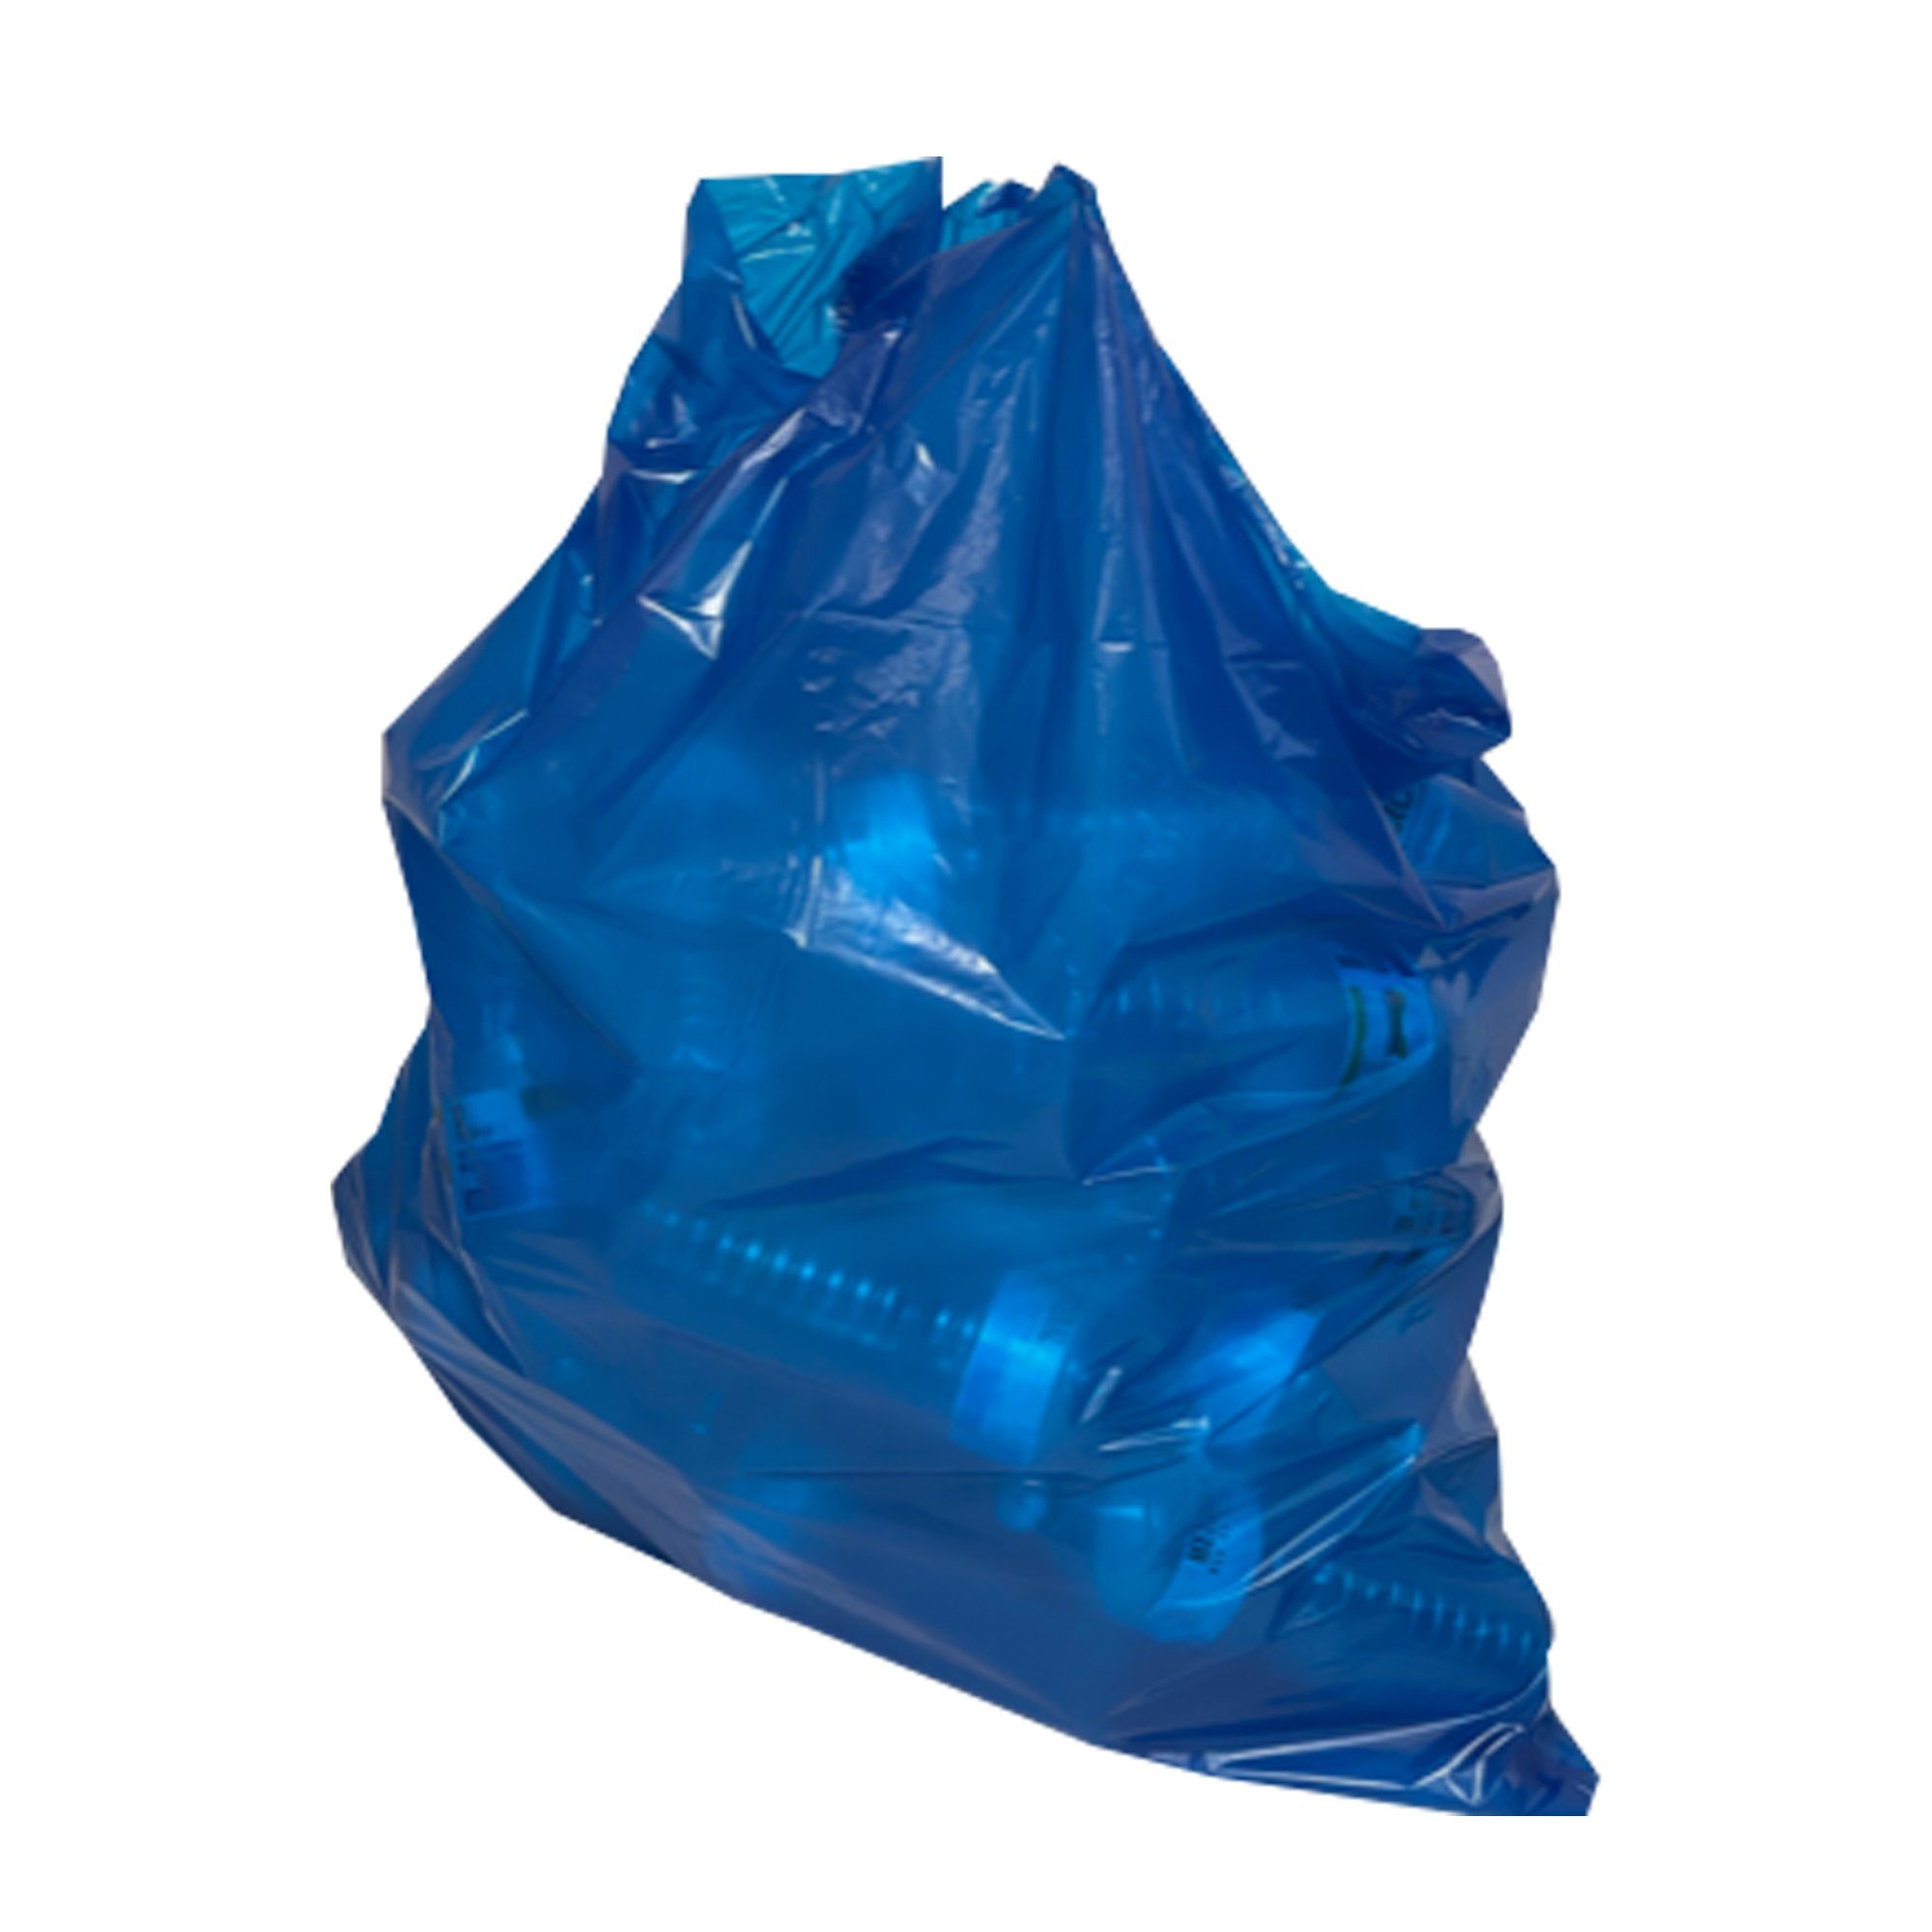 VaGo-Tools Mülleimer Abfallsäcke Müllbeutel 240L extra stark blau 1500x | Schwingdeckeleimer